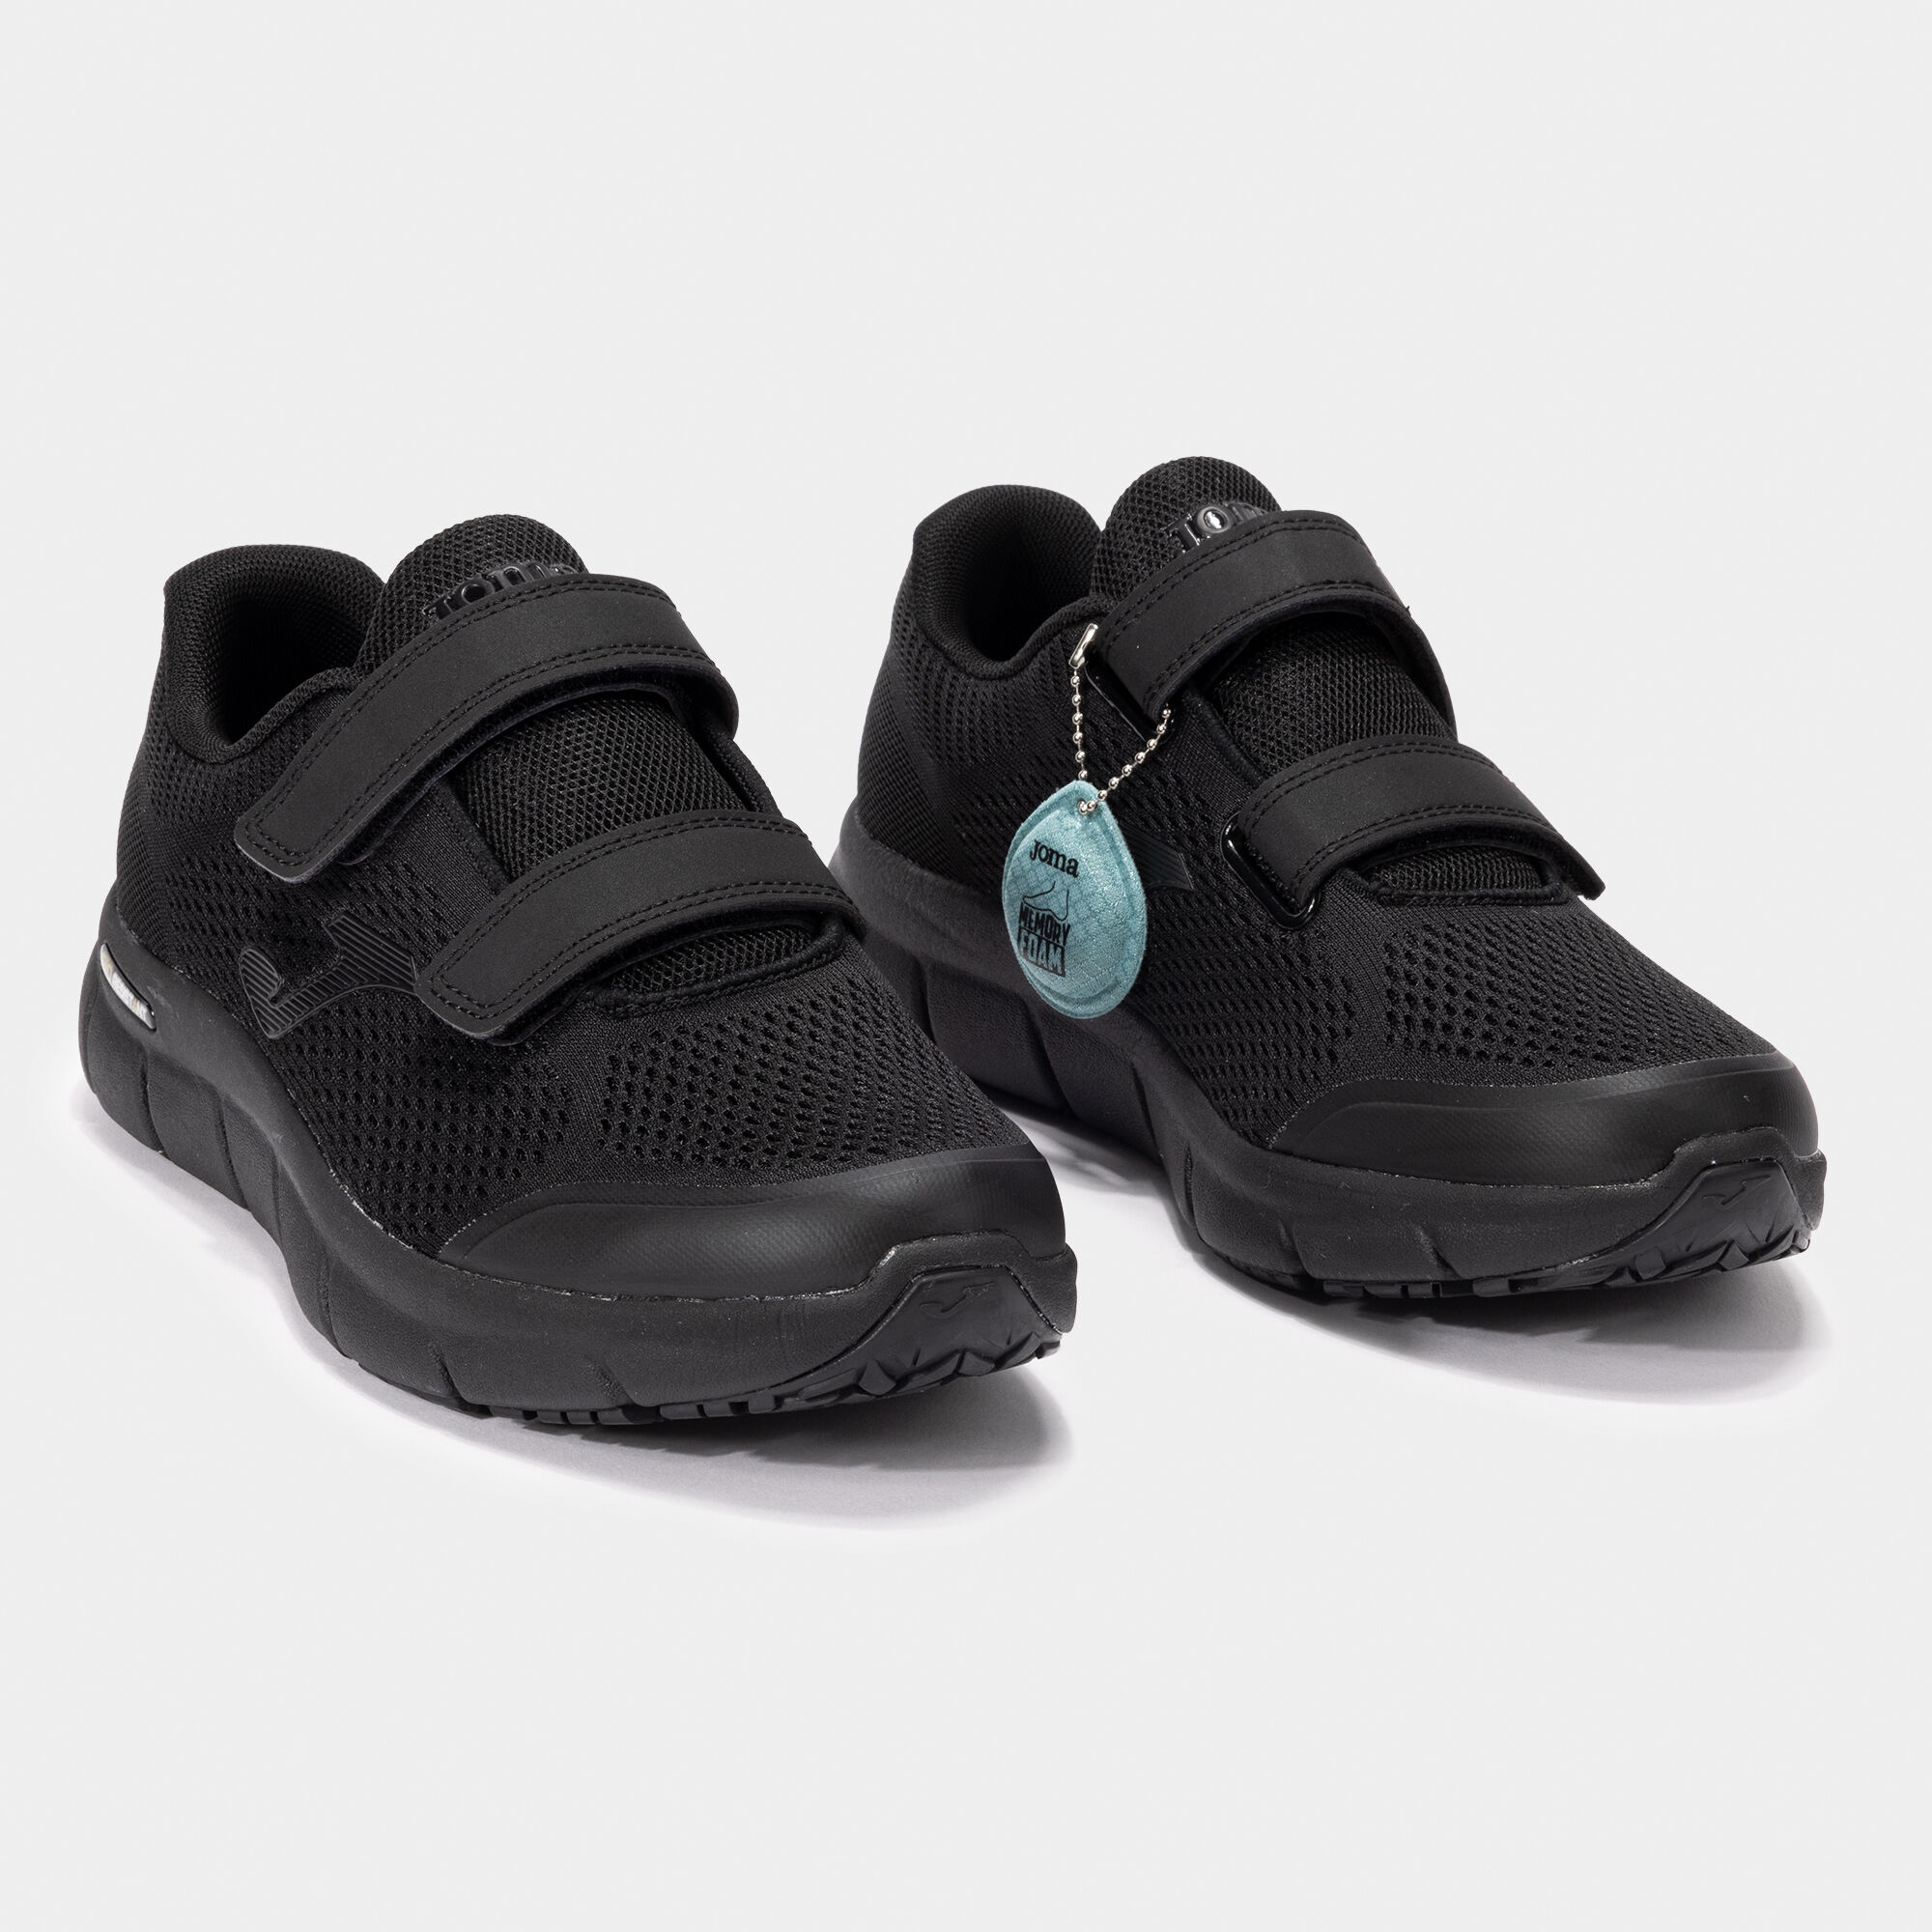 Pantofi sport casual Zen Men 24 bărbaȚi negru